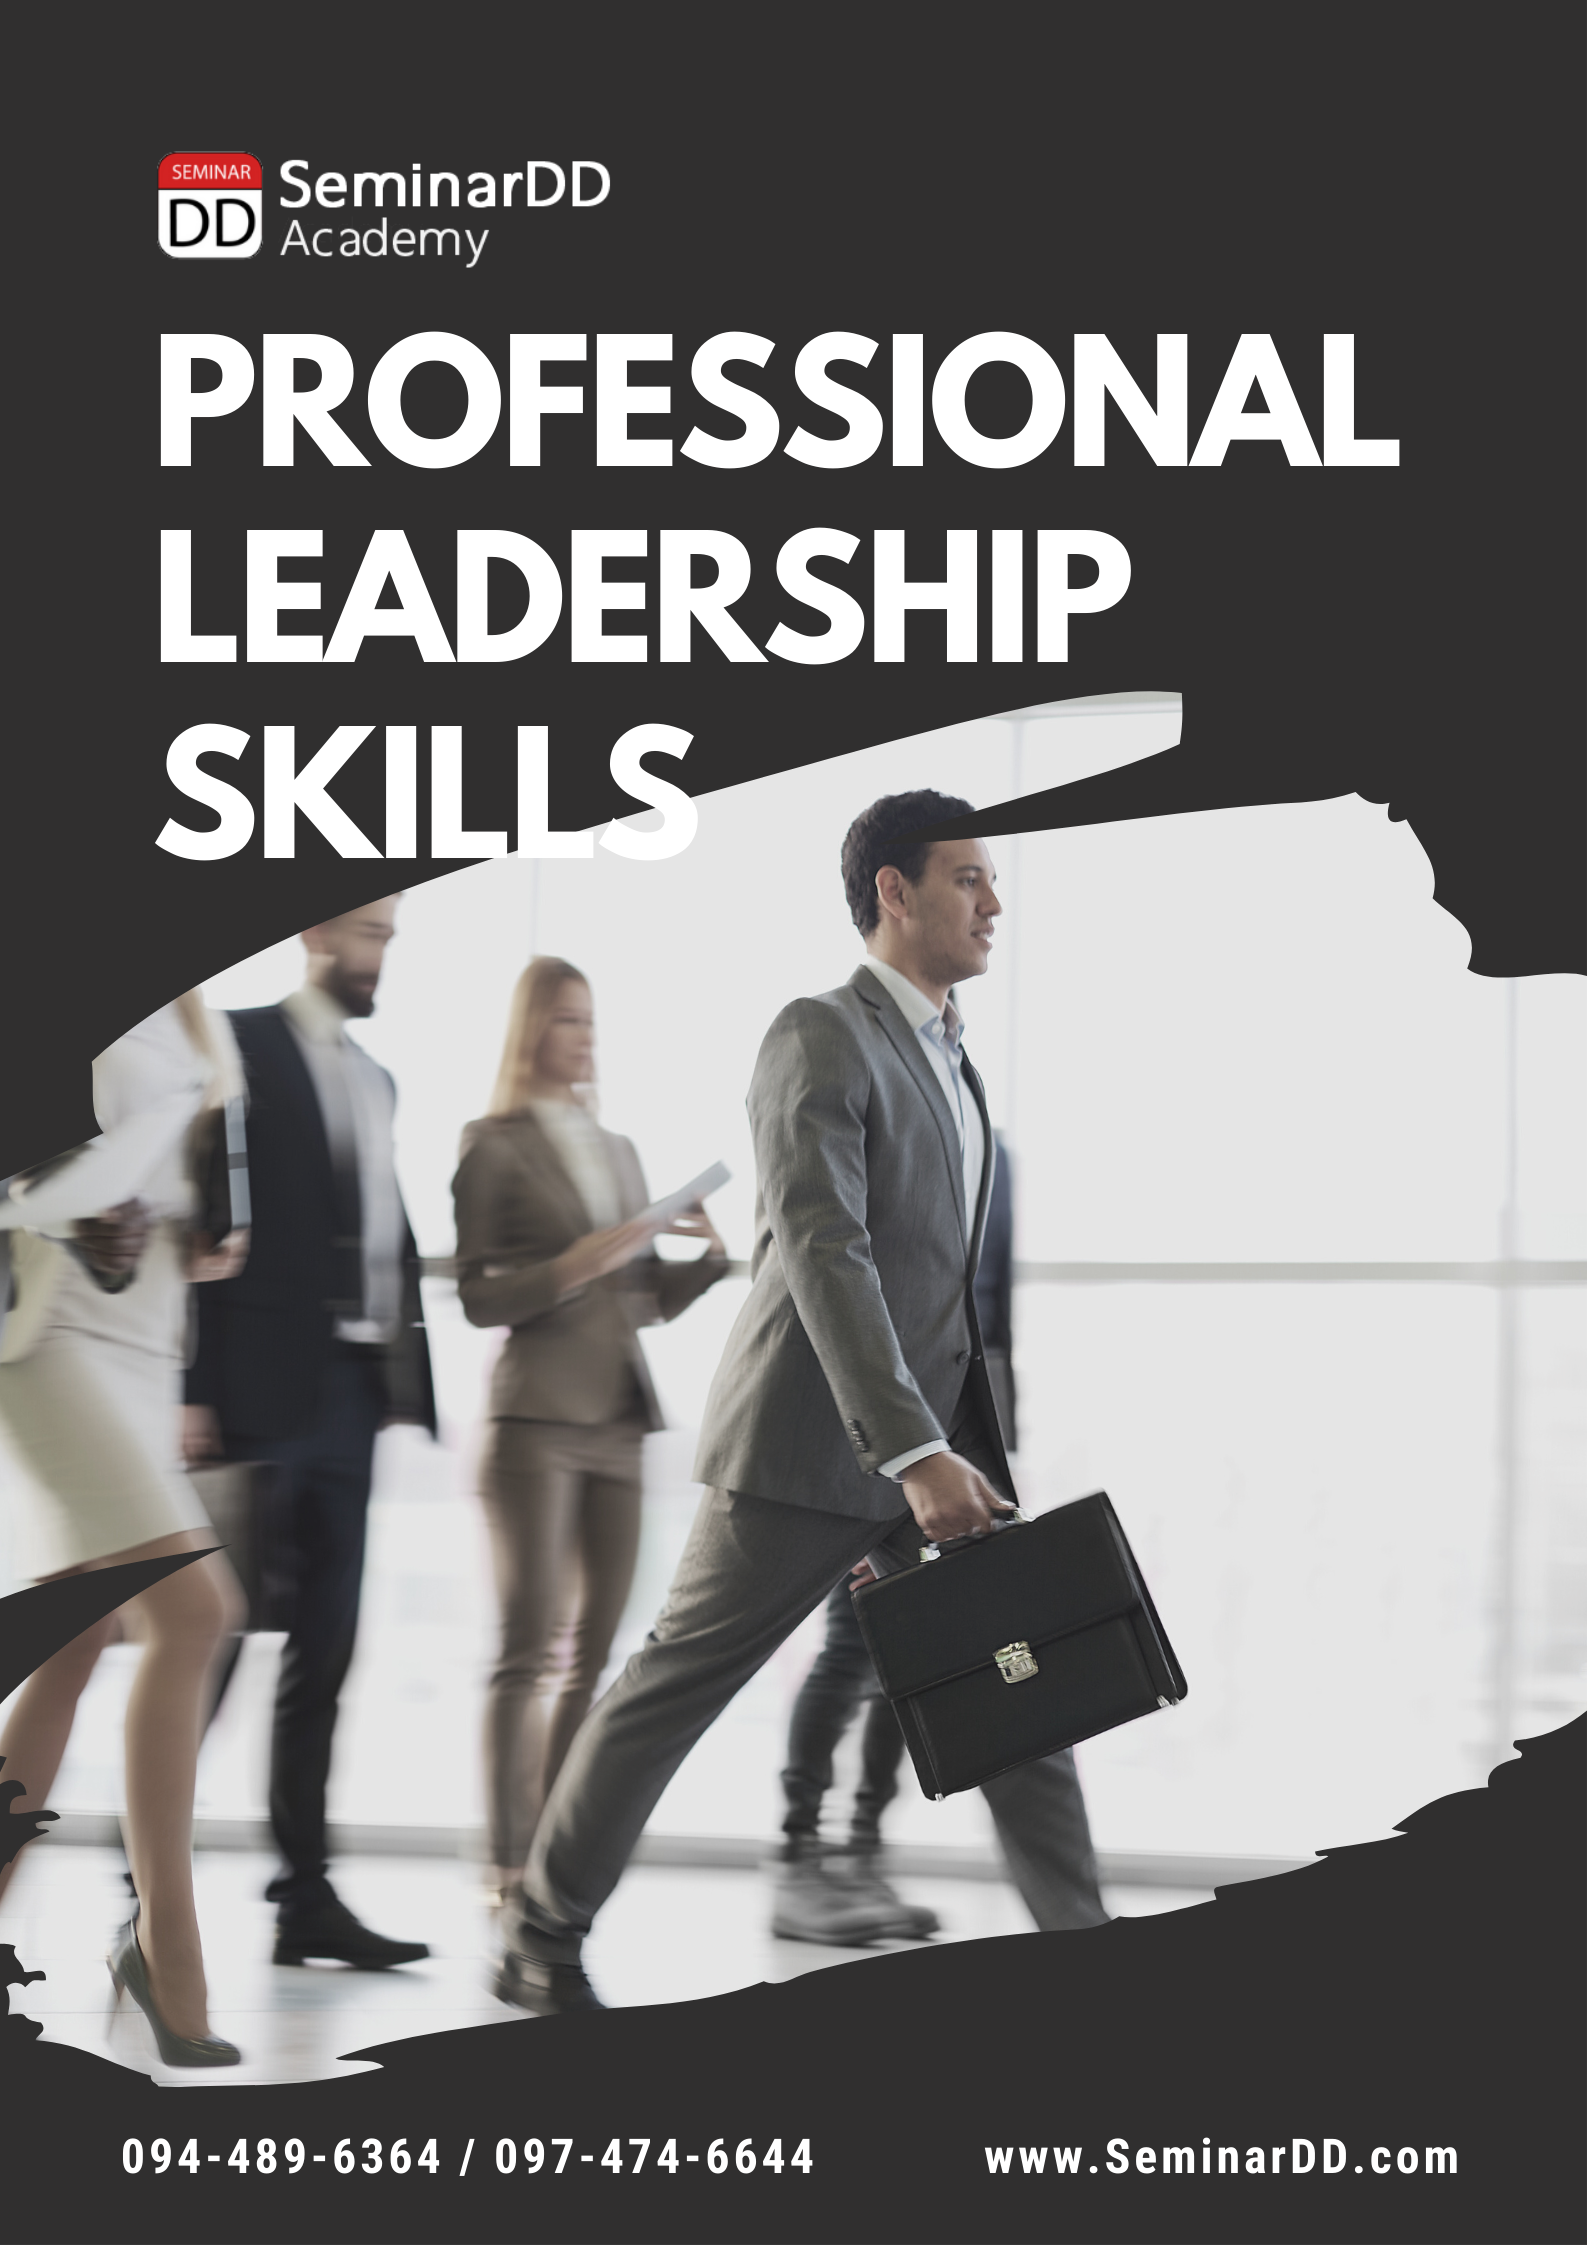 Virtual Training: อบรมออนไลน์ หลักสูตร ทักษะหัวหน้างานมืออาชีพ Professional Leadership Skills ( หลักสูตร 3 ชั่วโมง)